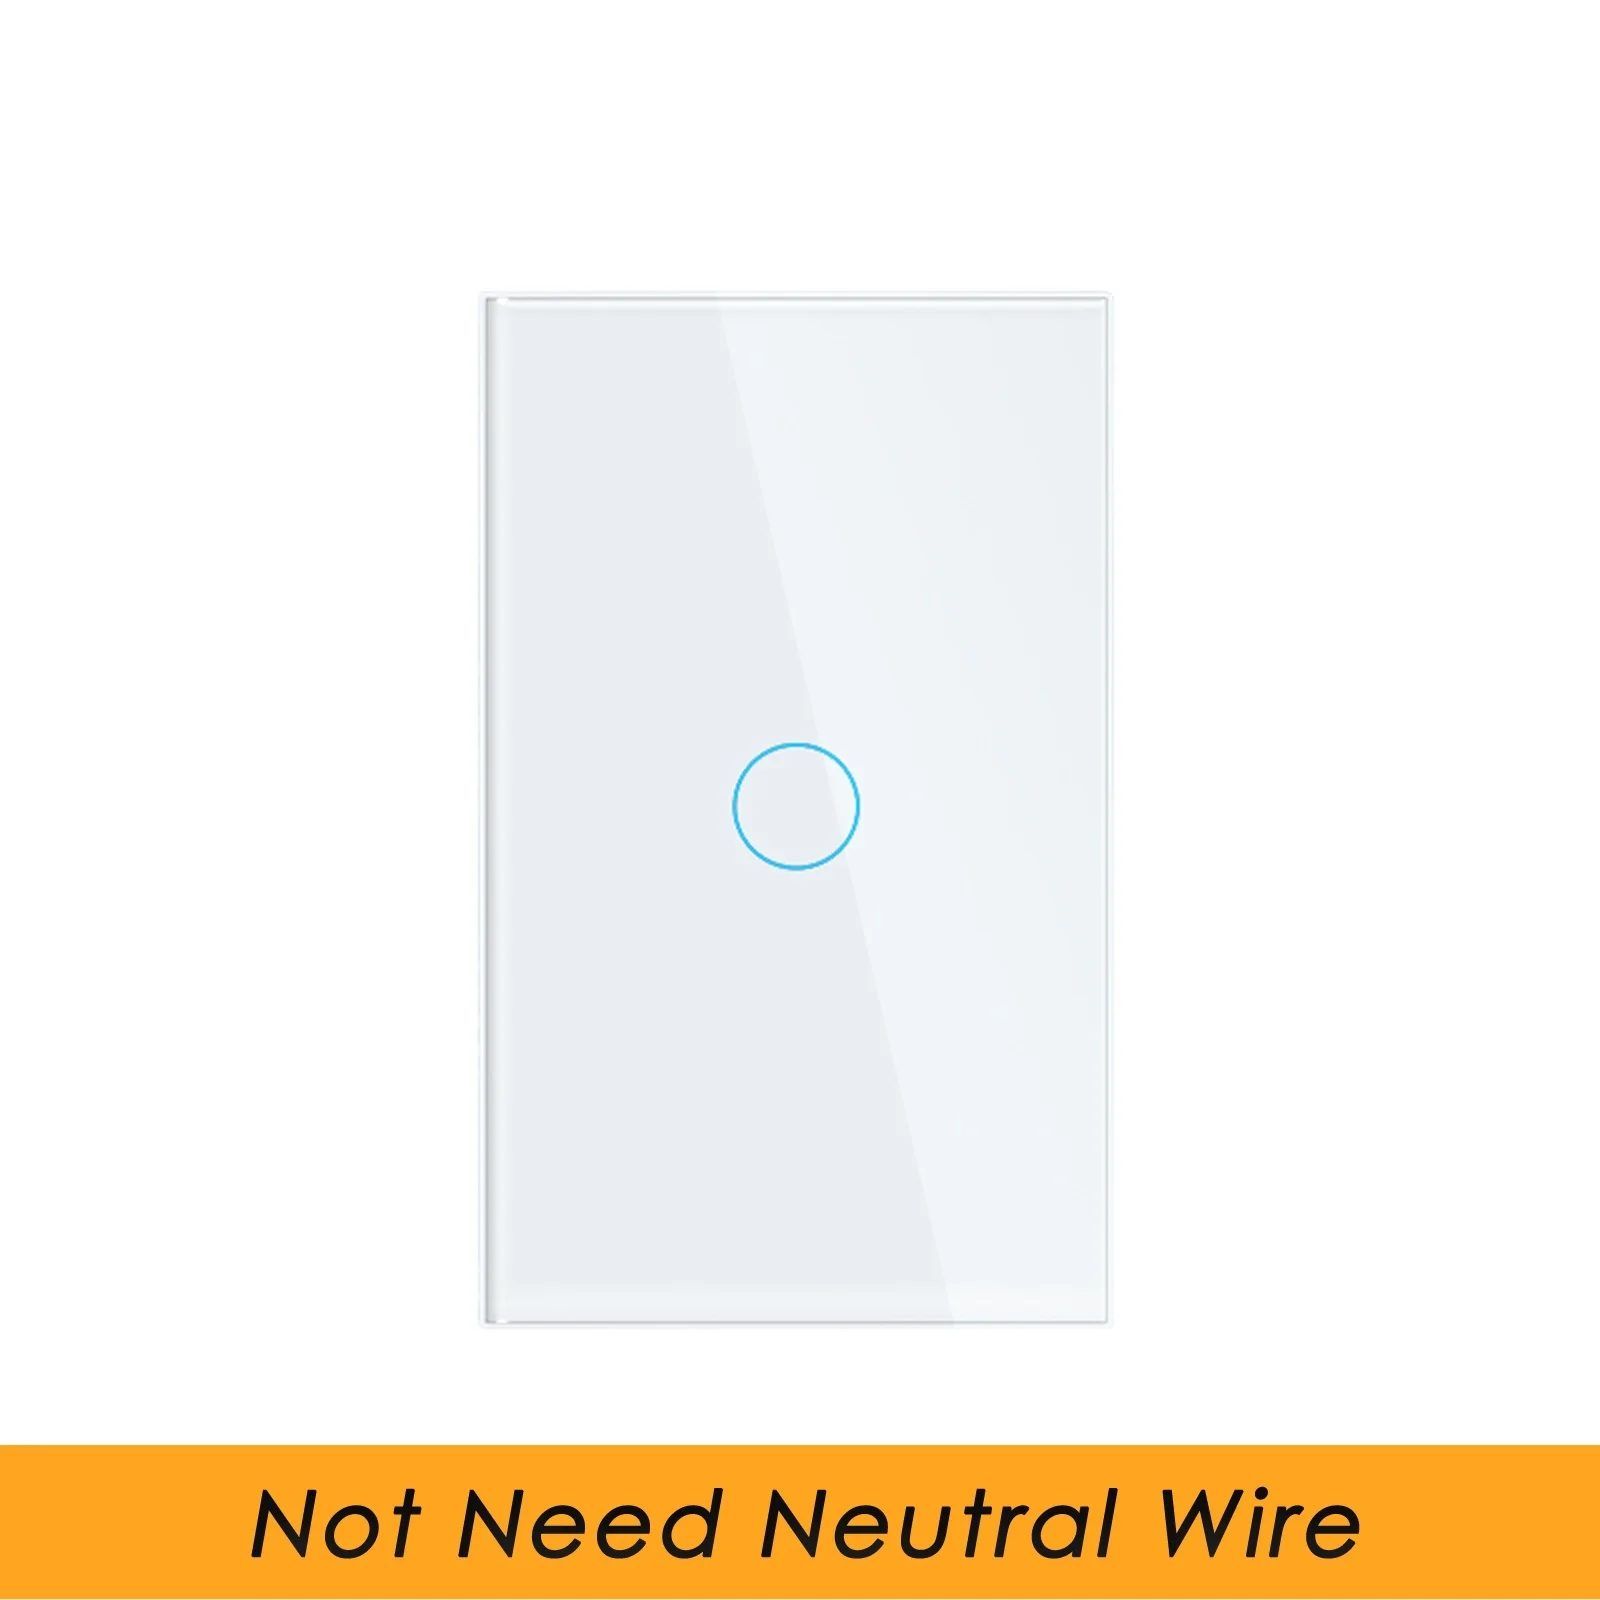 

NEW Zigbee Smart Wall Light Switch No Neutral 433 RF, Support Hub eWeLink Zigbee Bridge, Home Assistant via Zigbee2mqtt